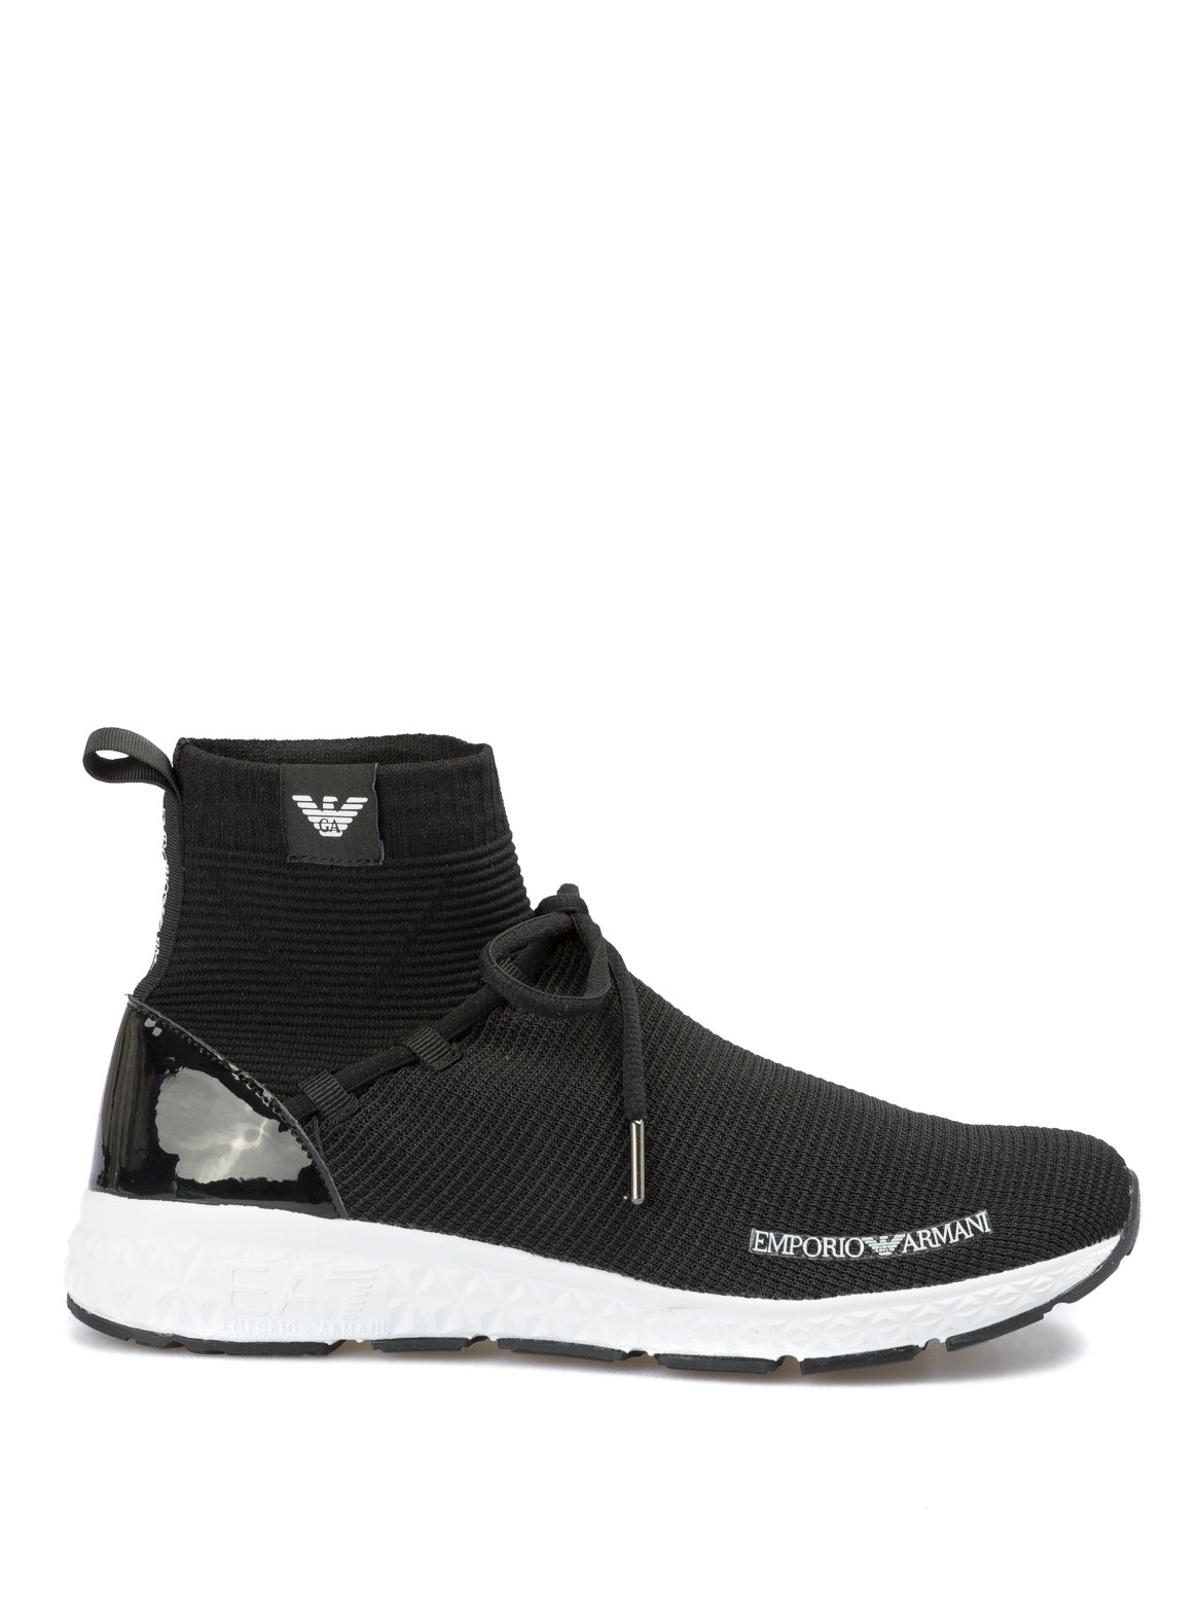 Emporio Armani Neoprene High-top Sock Sneakers in Black for Men - Lyst